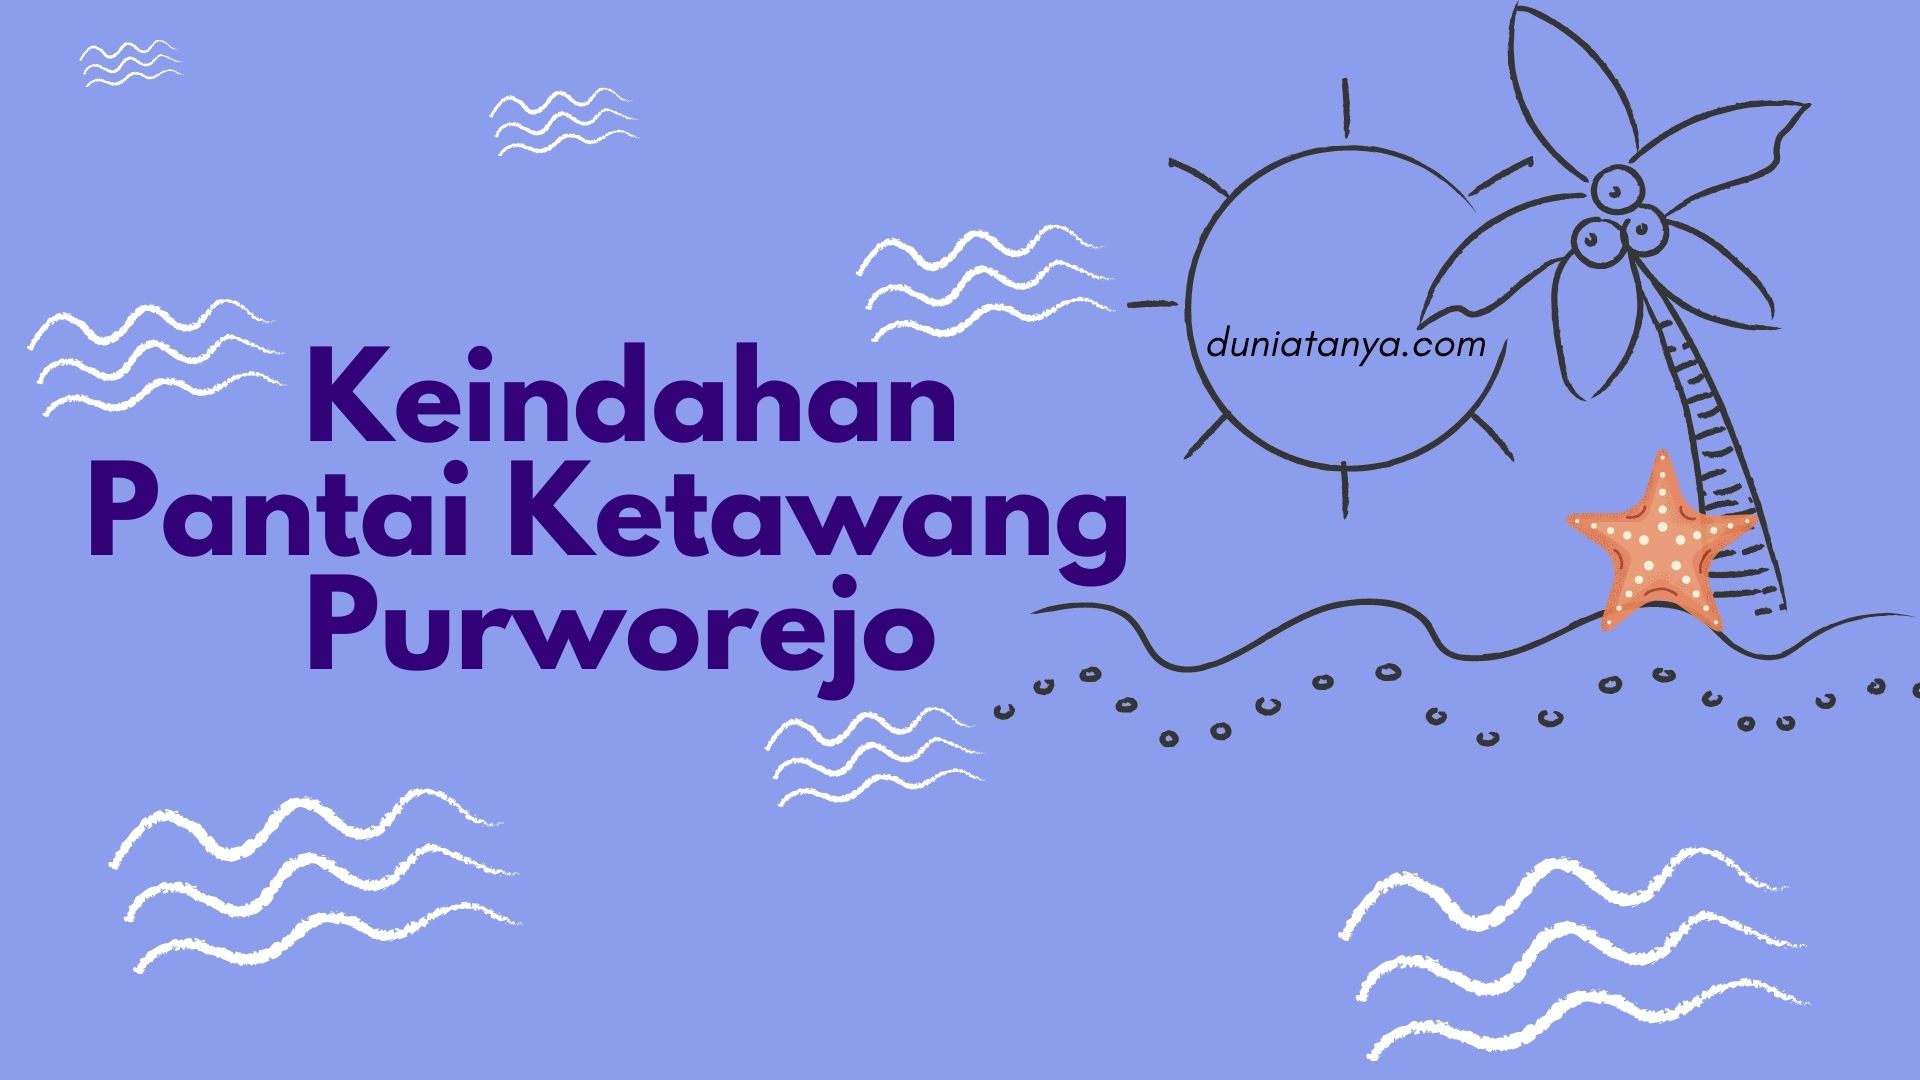 You are currently viewing Keindahan Pantai Ketawang Purworejo